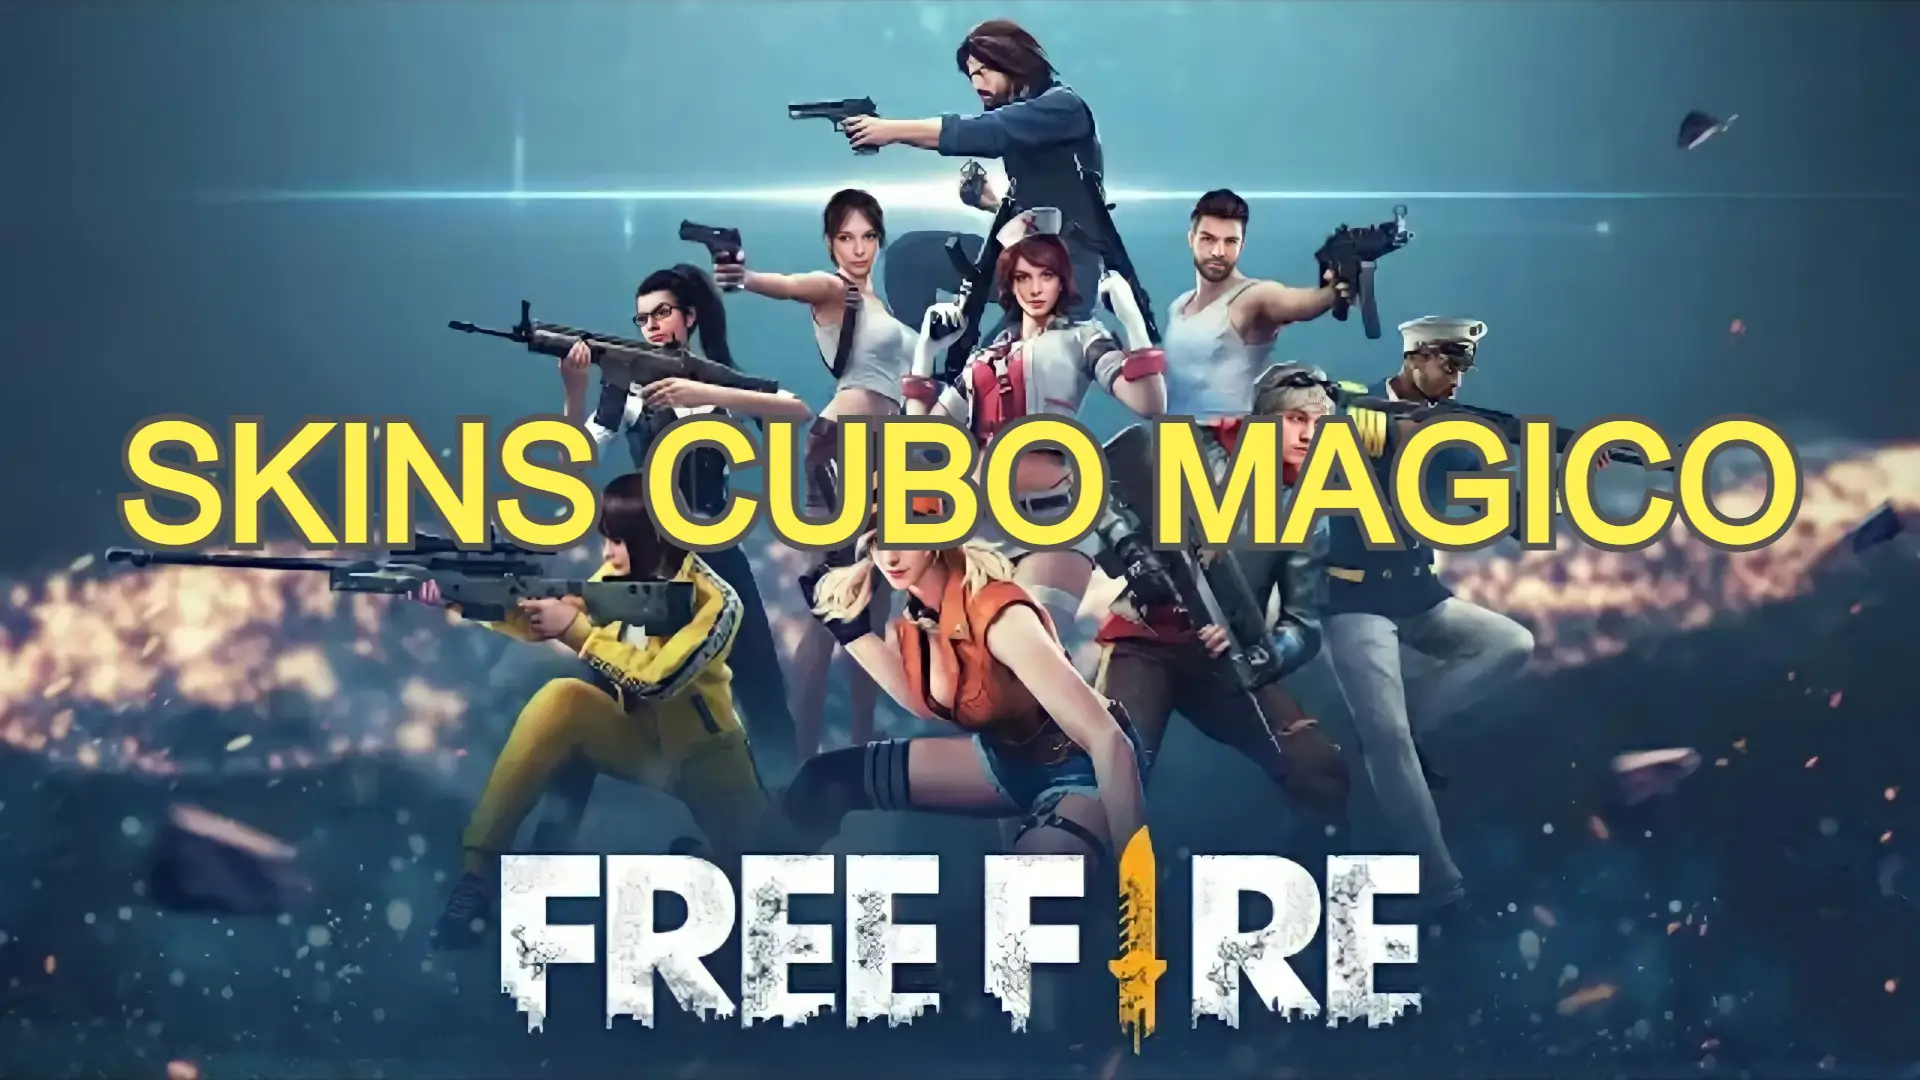 Free fire 2021 skins cubo magico